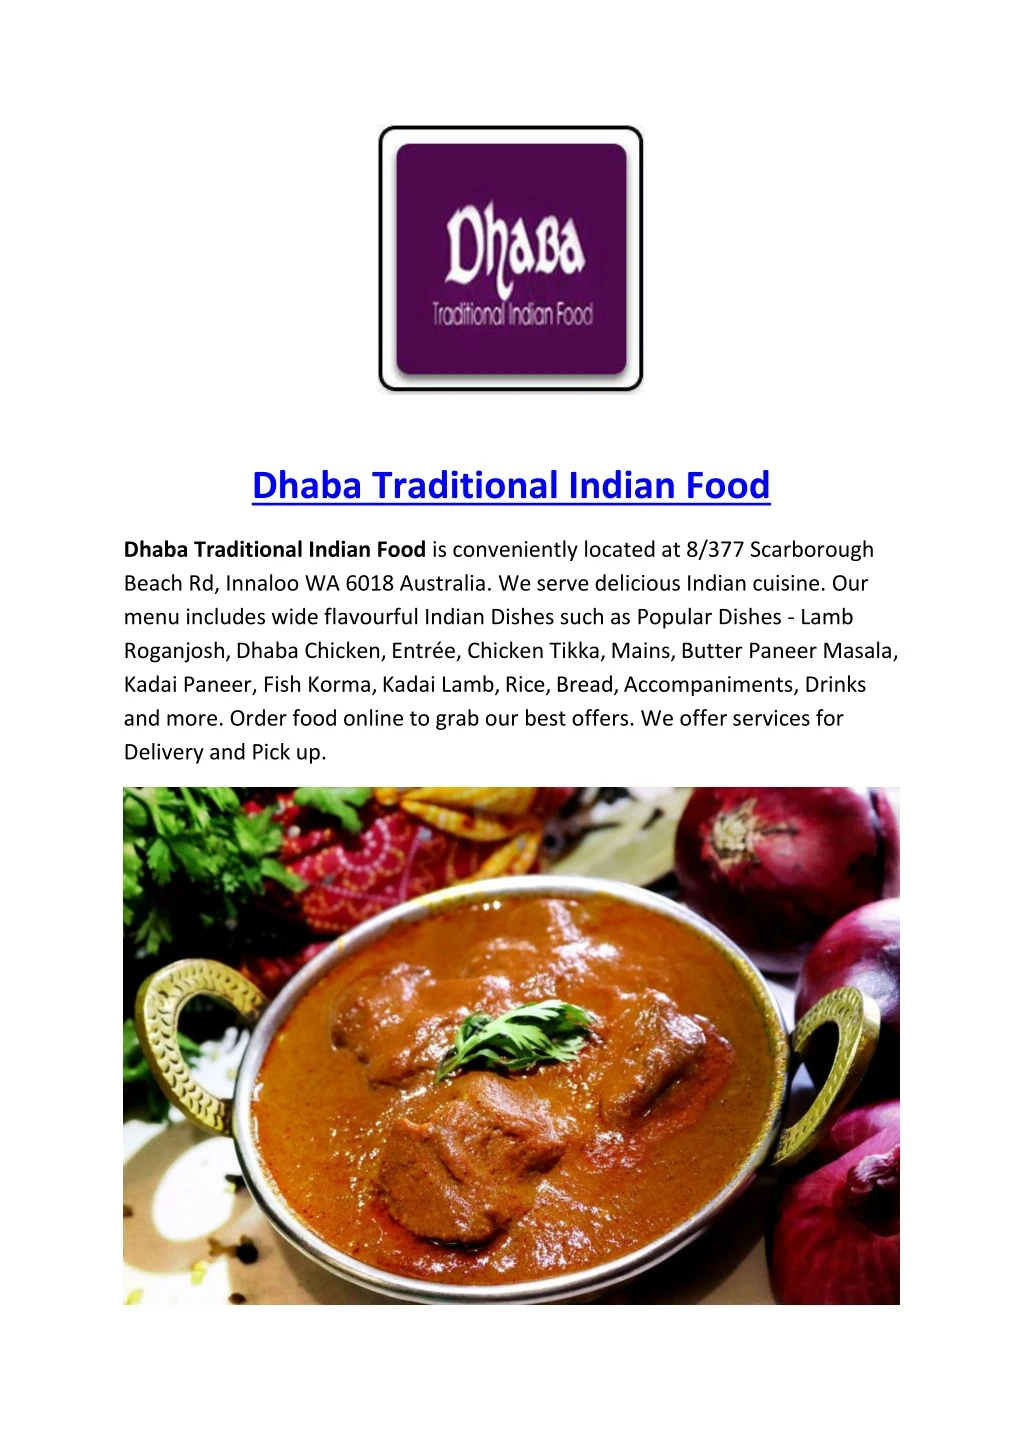 dhaba traditional indian food